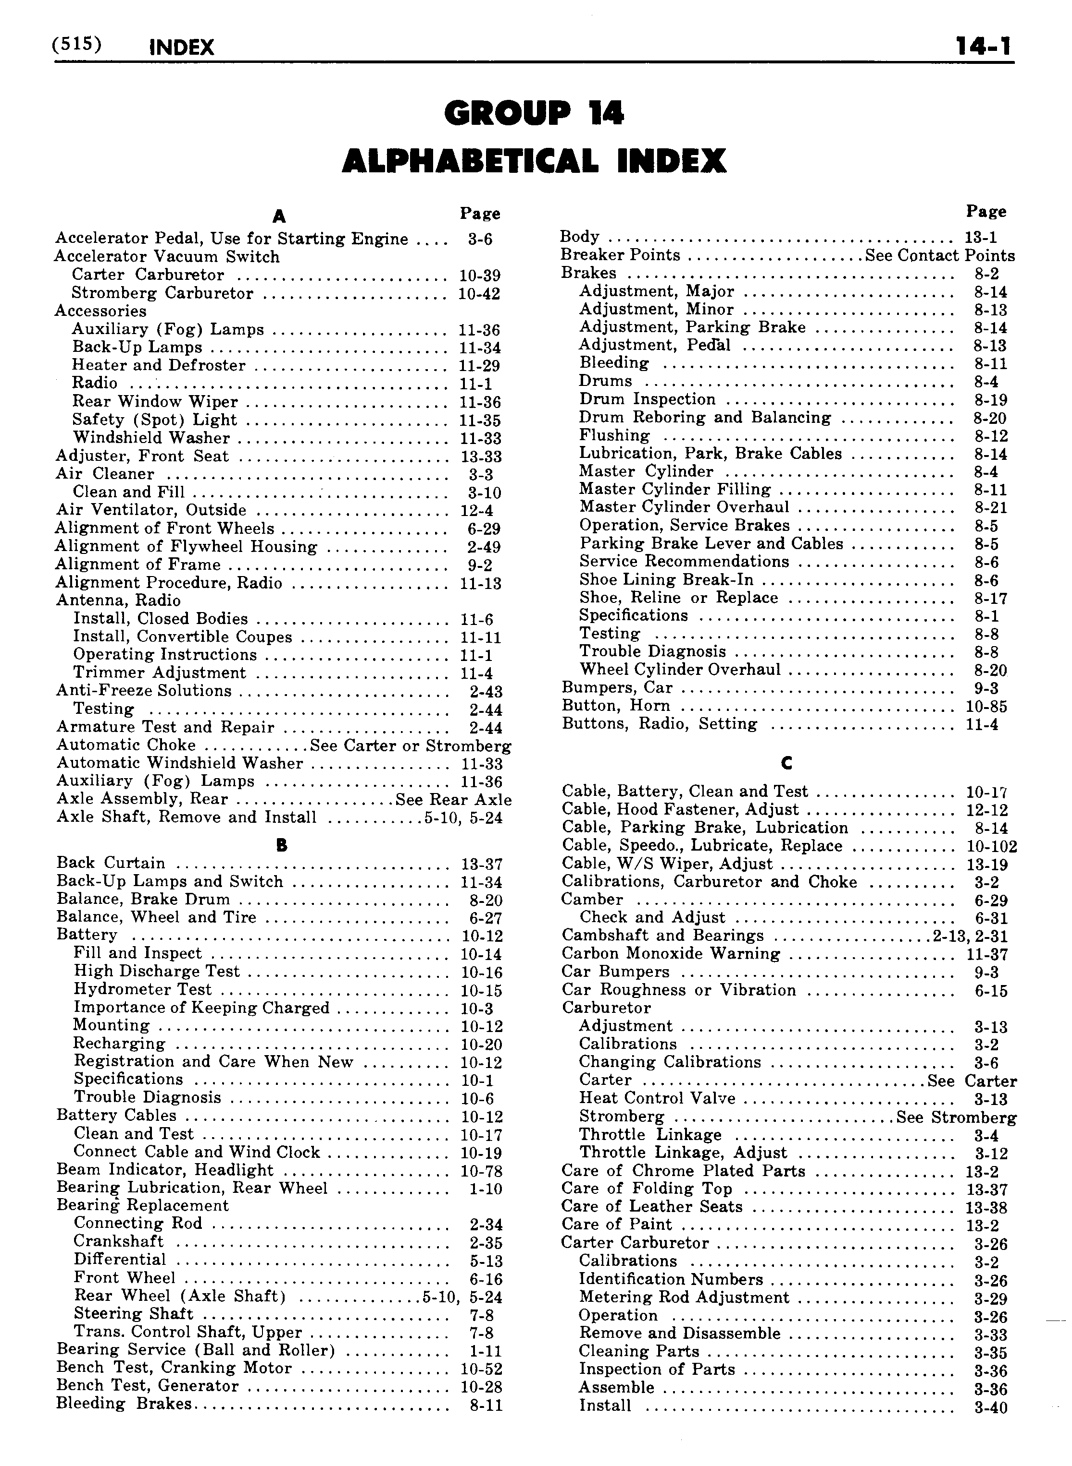 n_15 1948 Buick Shop Manual - Index-001-001.jpg